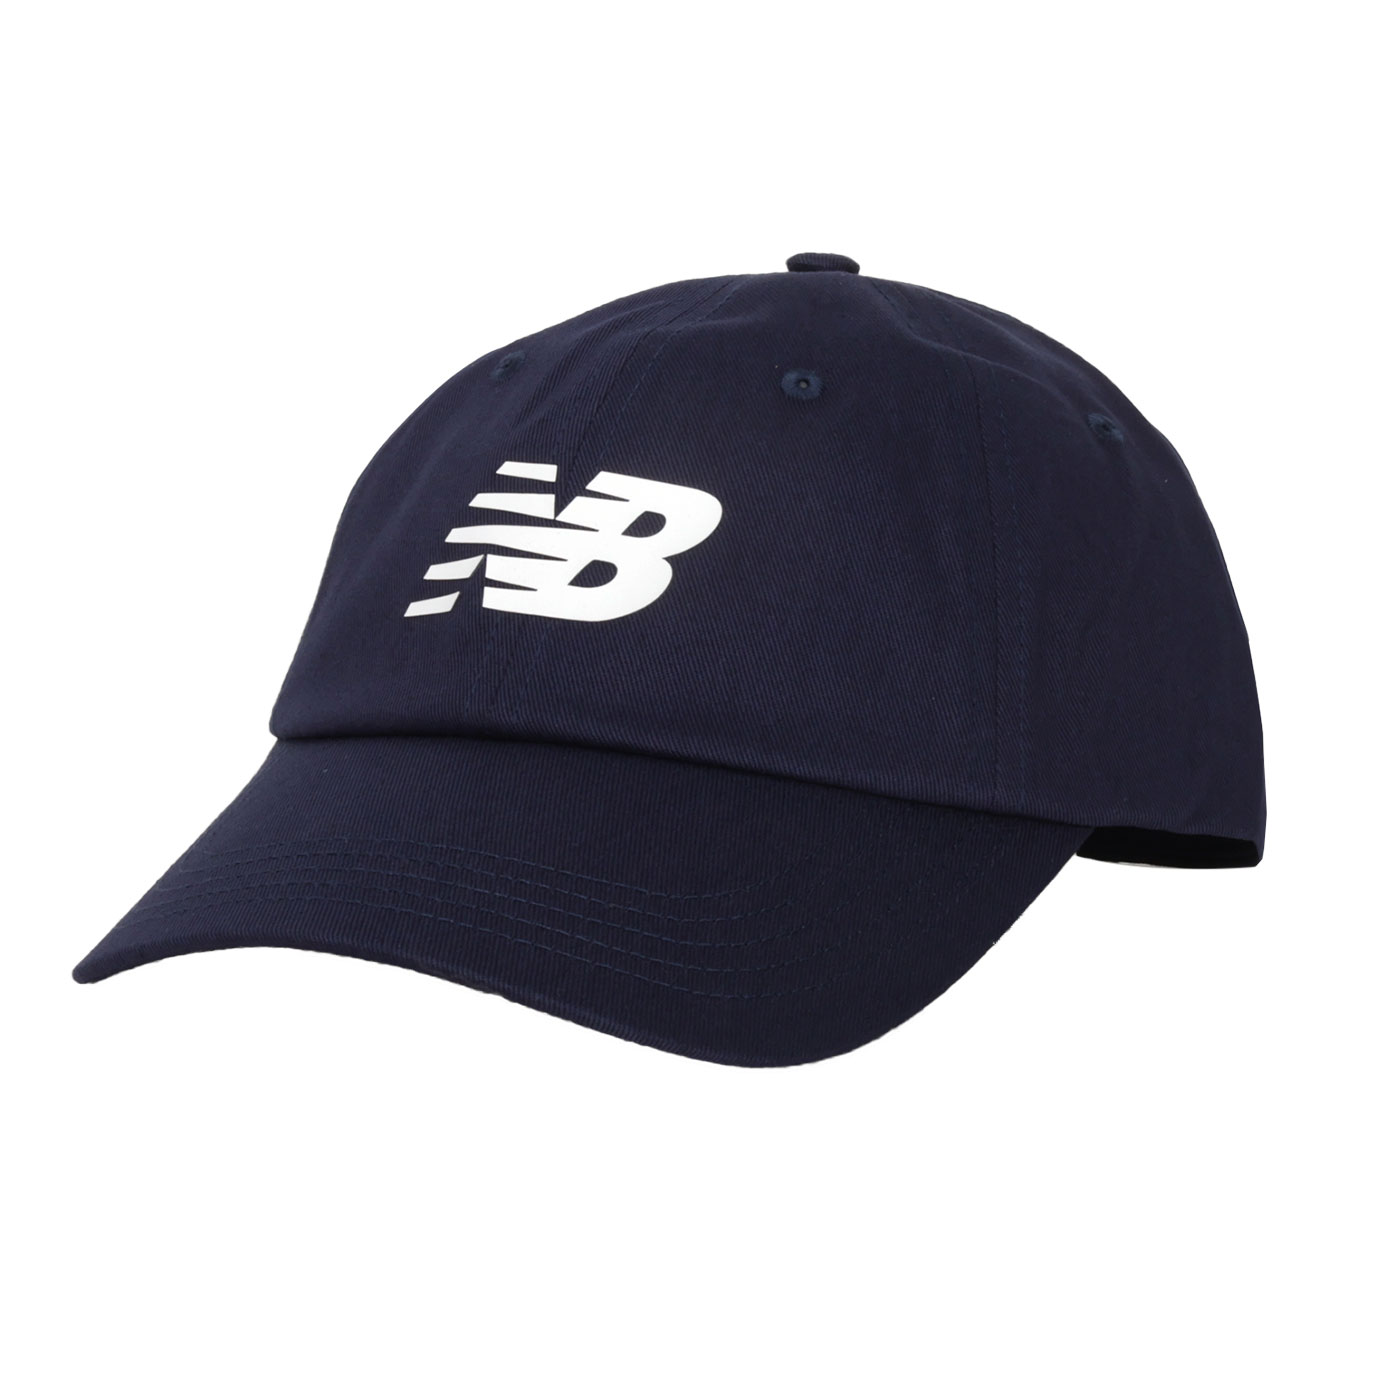 NEW BALANCE 棒球帽  LAH13010TNV - 丈青白